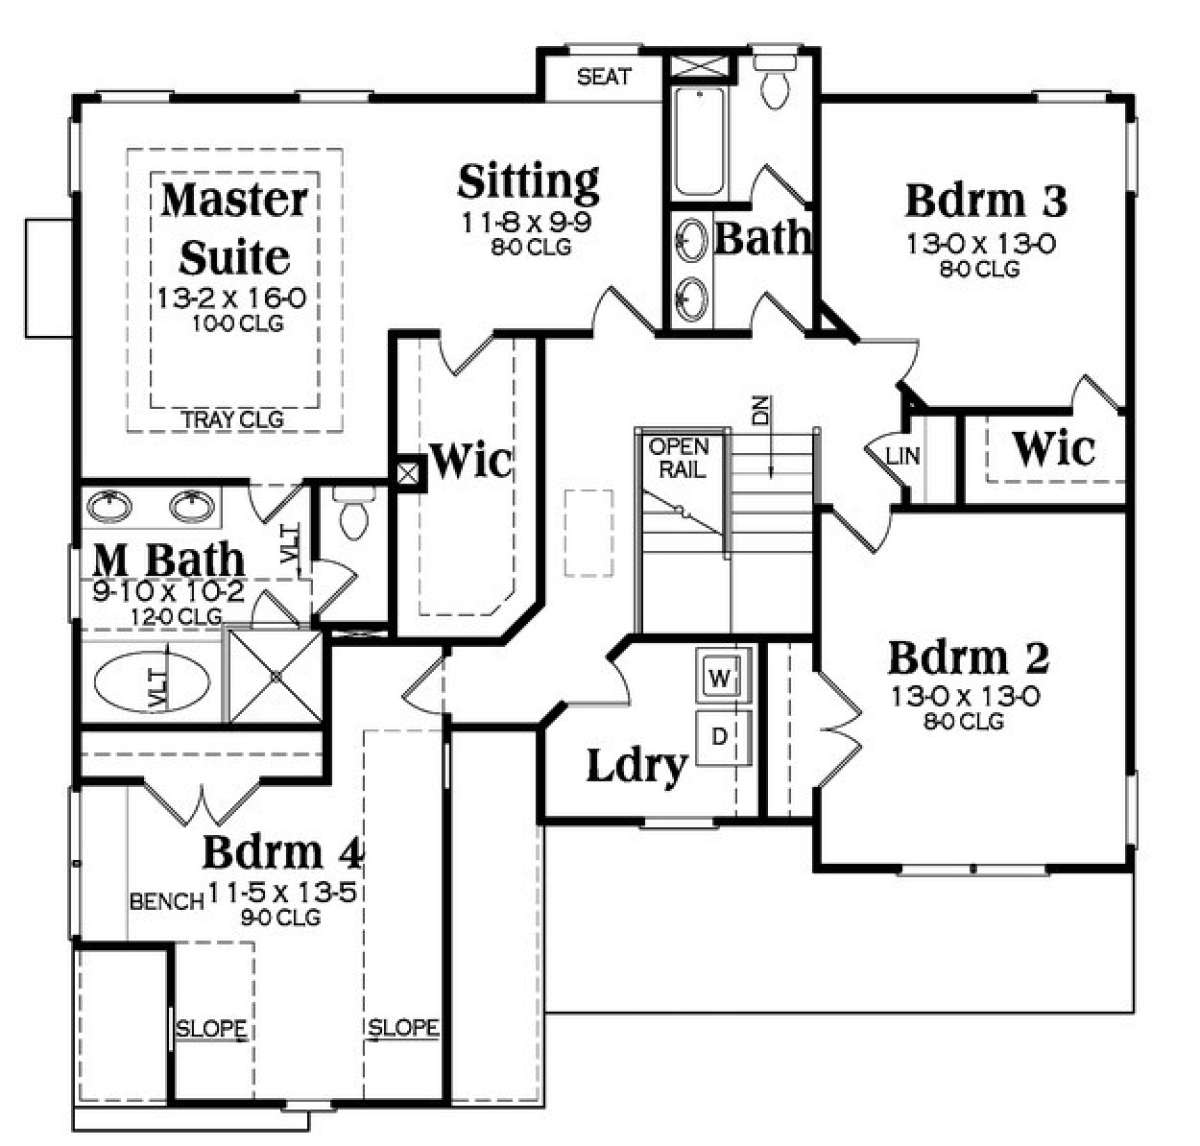 Craftsman Plan: 2,742 Square Feet, 4 Bedrooms, 2.5 Bathrooms - 009-00233